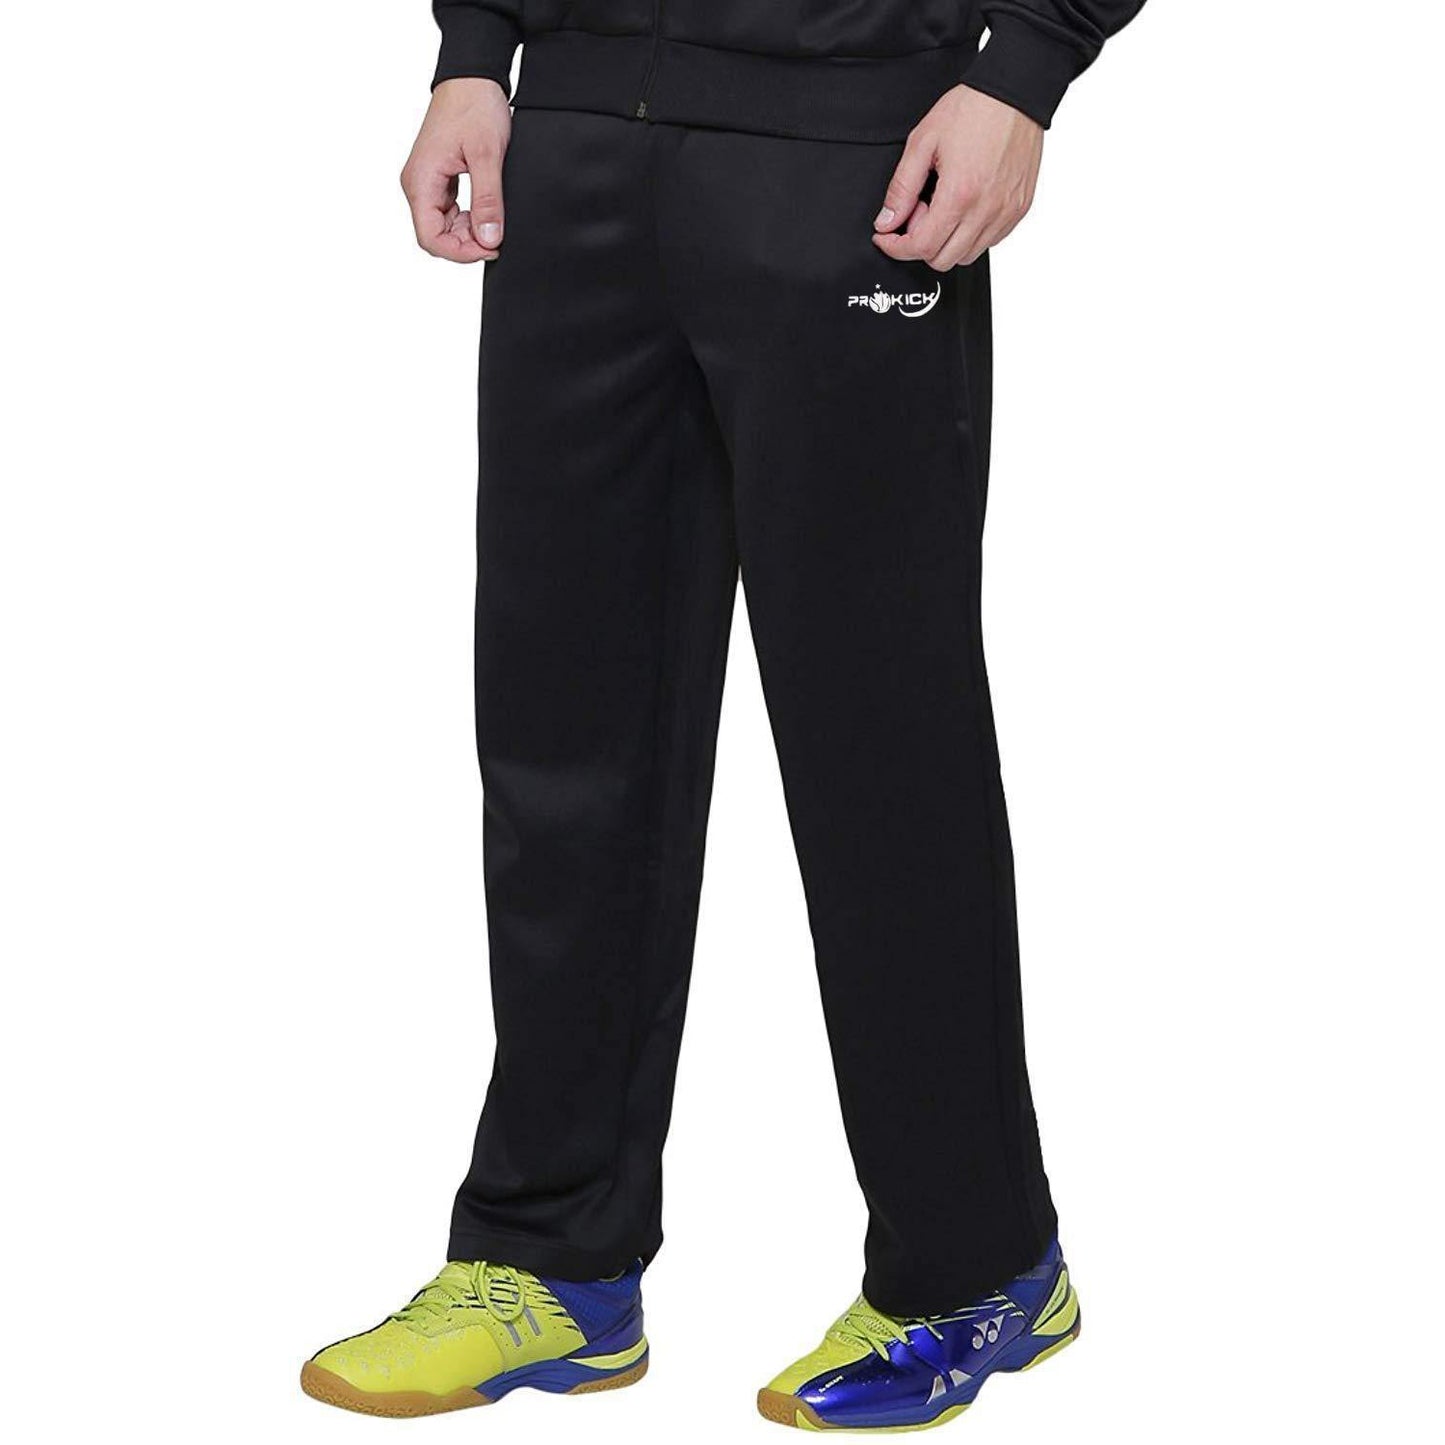 Prokick Men's Regular fit Sweat Control Sports Track Pant, Black - Best Price online Prokicksports.com